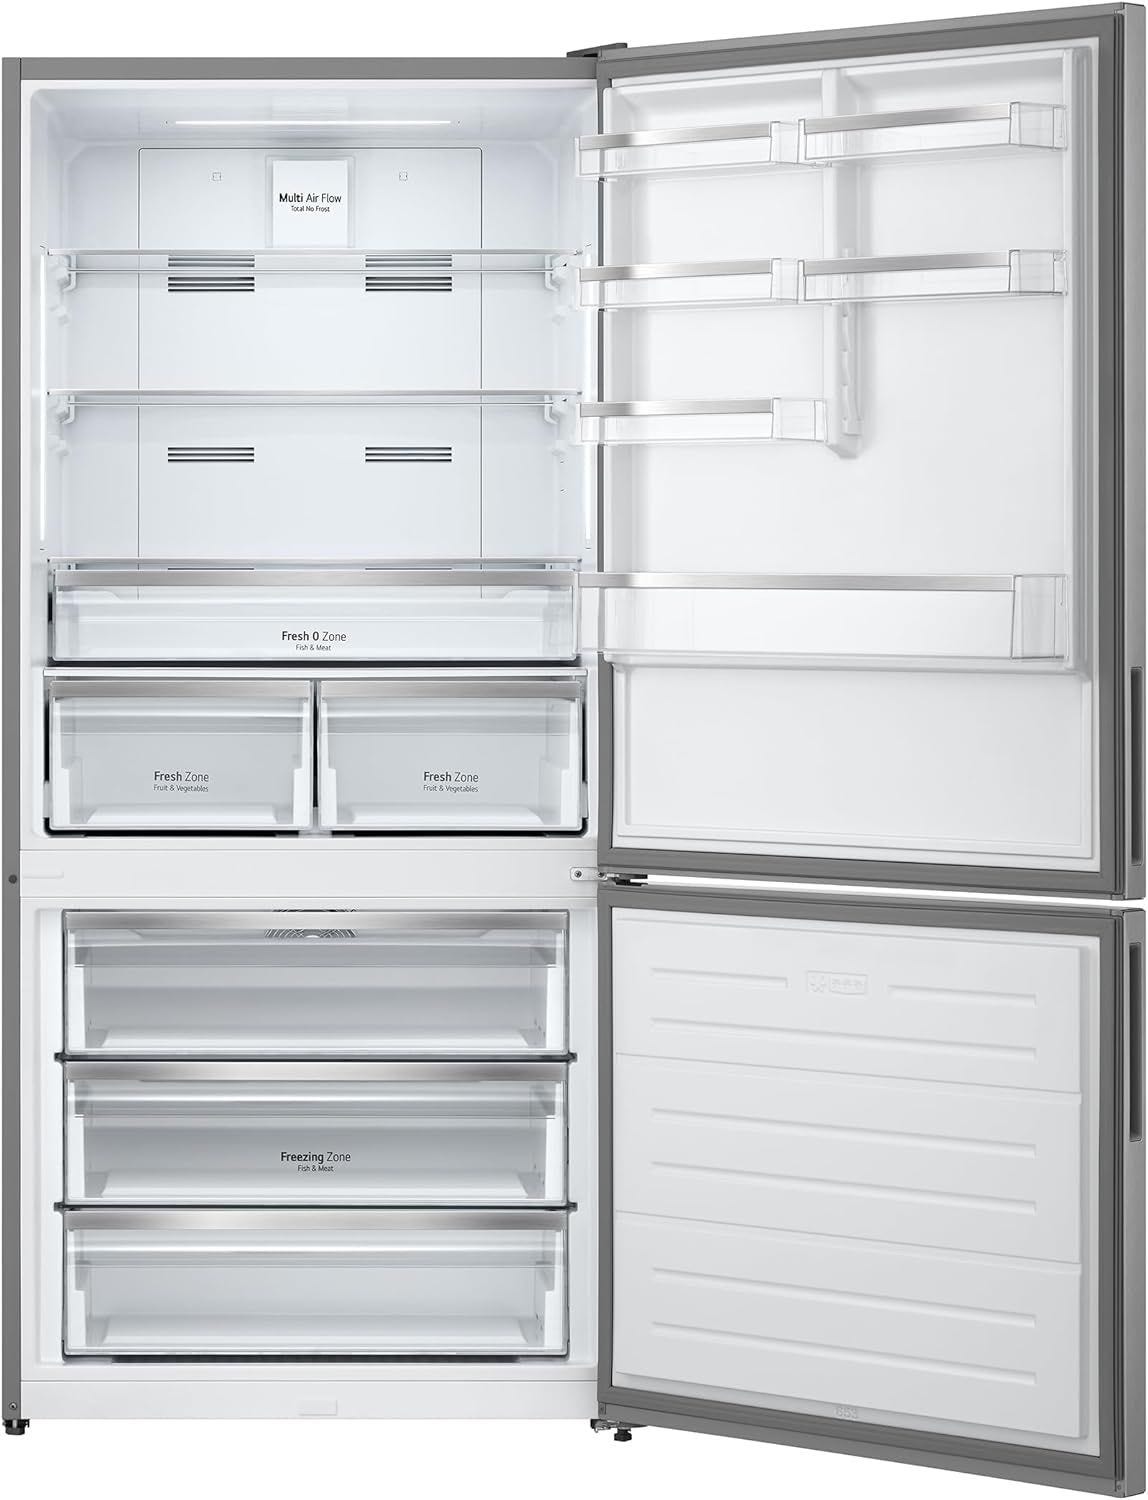 LG Digital No Frost Refrigerator With Inverter Technology, 588 Liters, Silver - GTF569PSAM